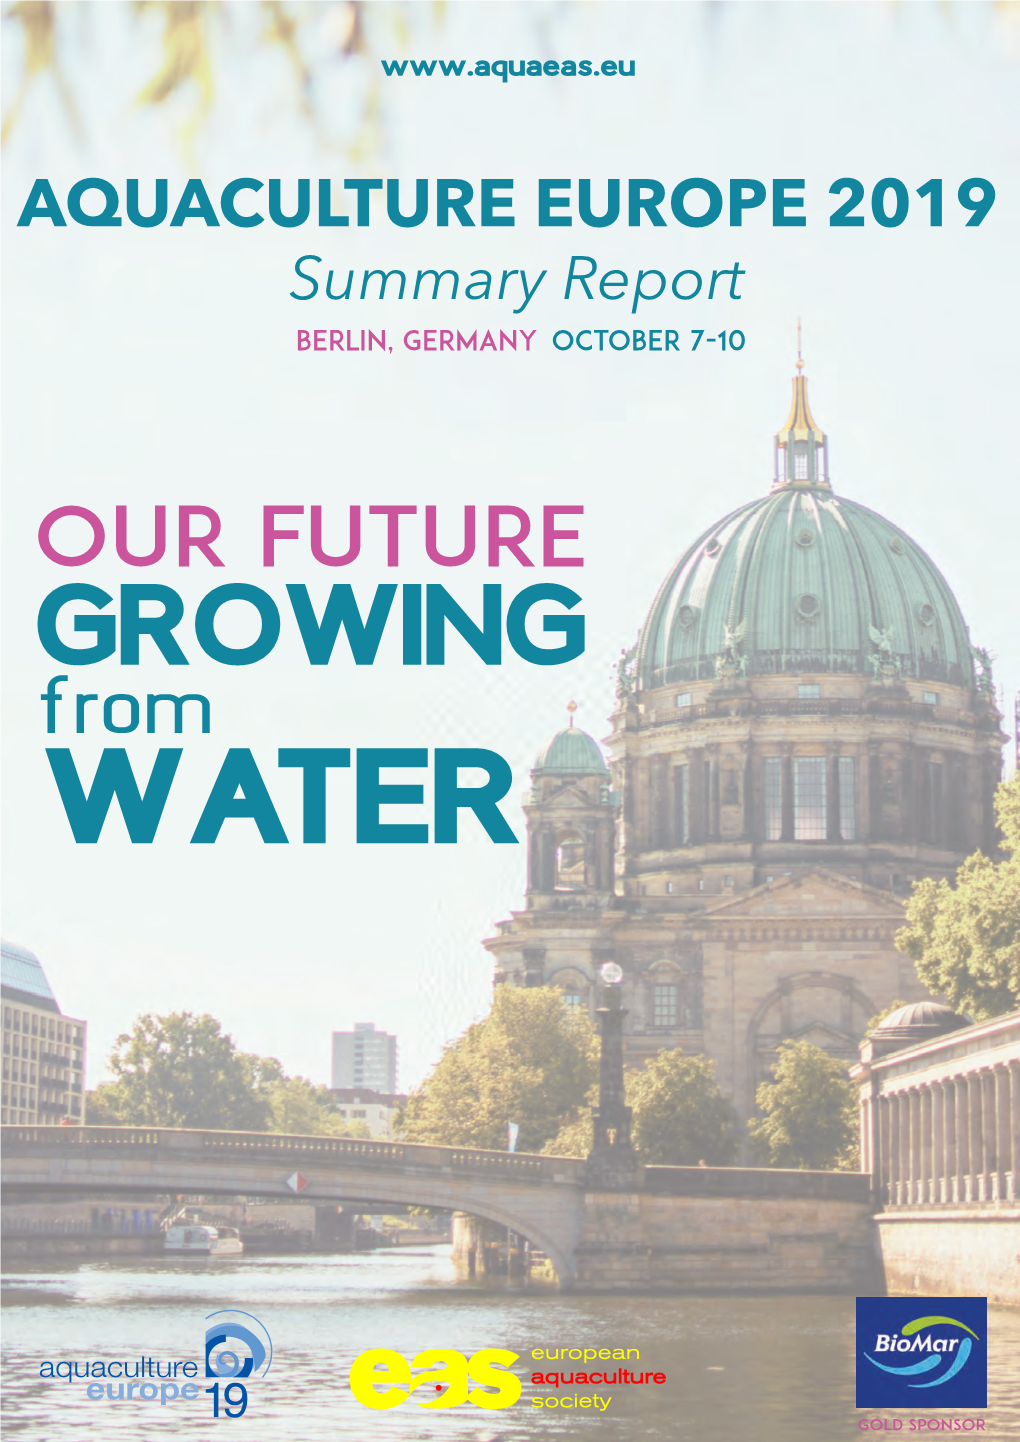 AQUACULTURE EUROPE 2019 Summary Report Berlin, Germany OCTOBER 7-10